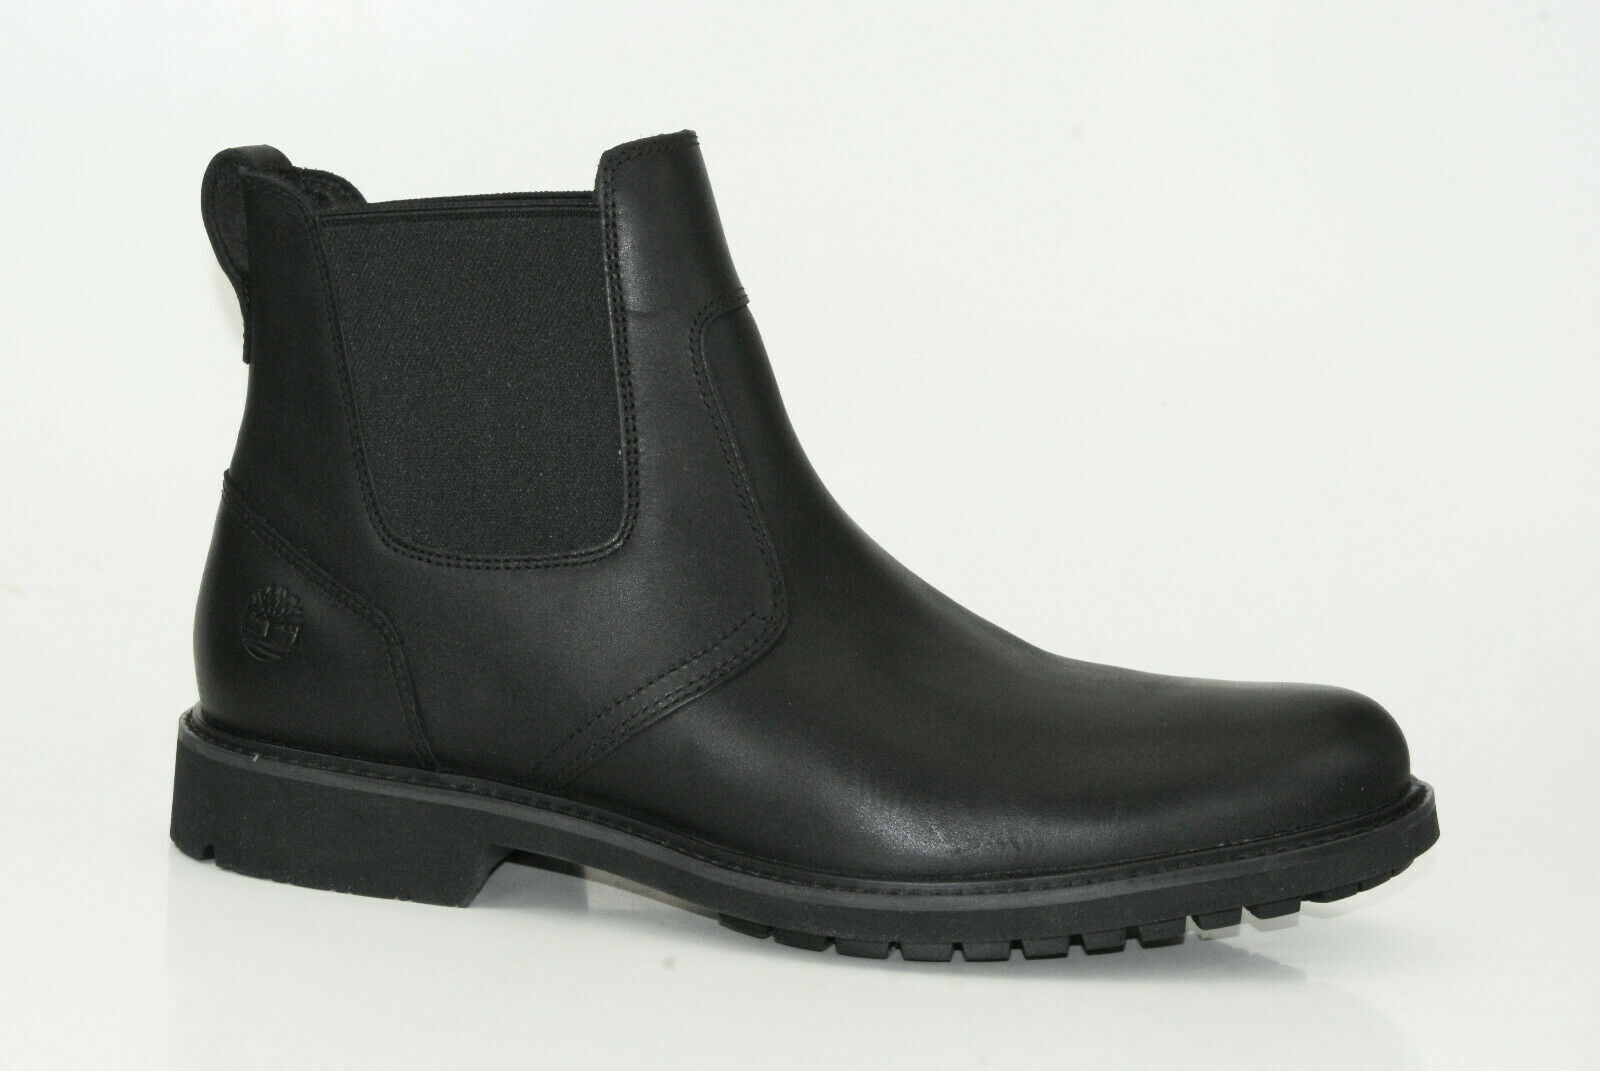 Timberland Stormbucks Chelsea Boots Herren Schuhe Stiefeletten 5551R Weite W